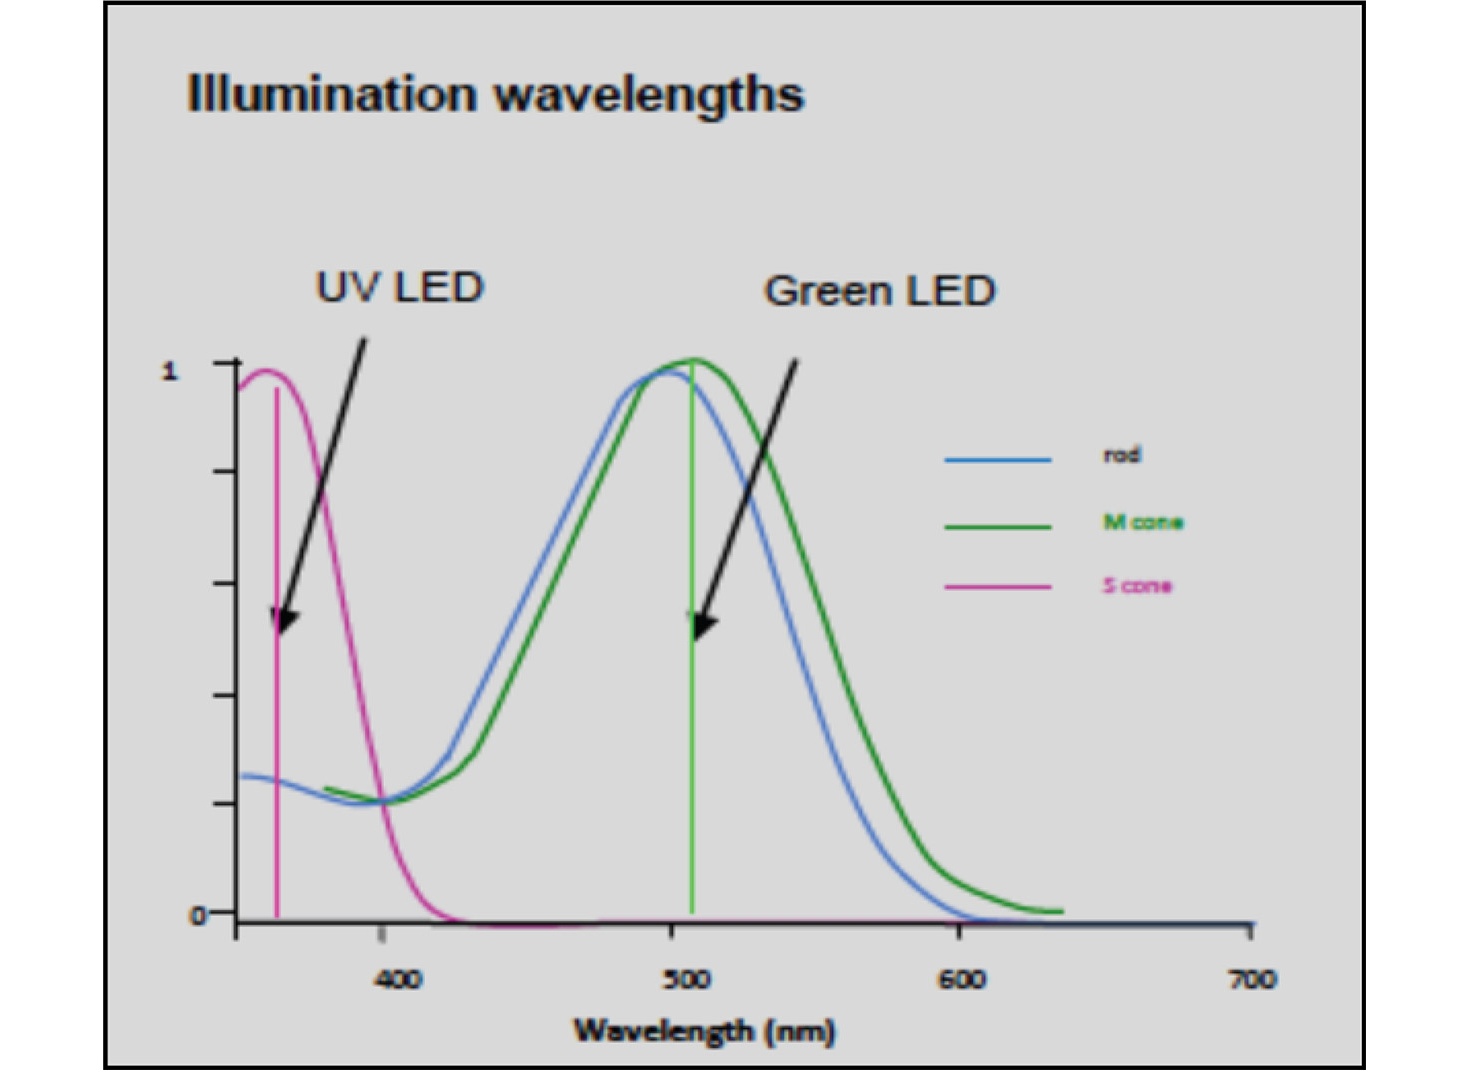 Illumination wavelengths chart